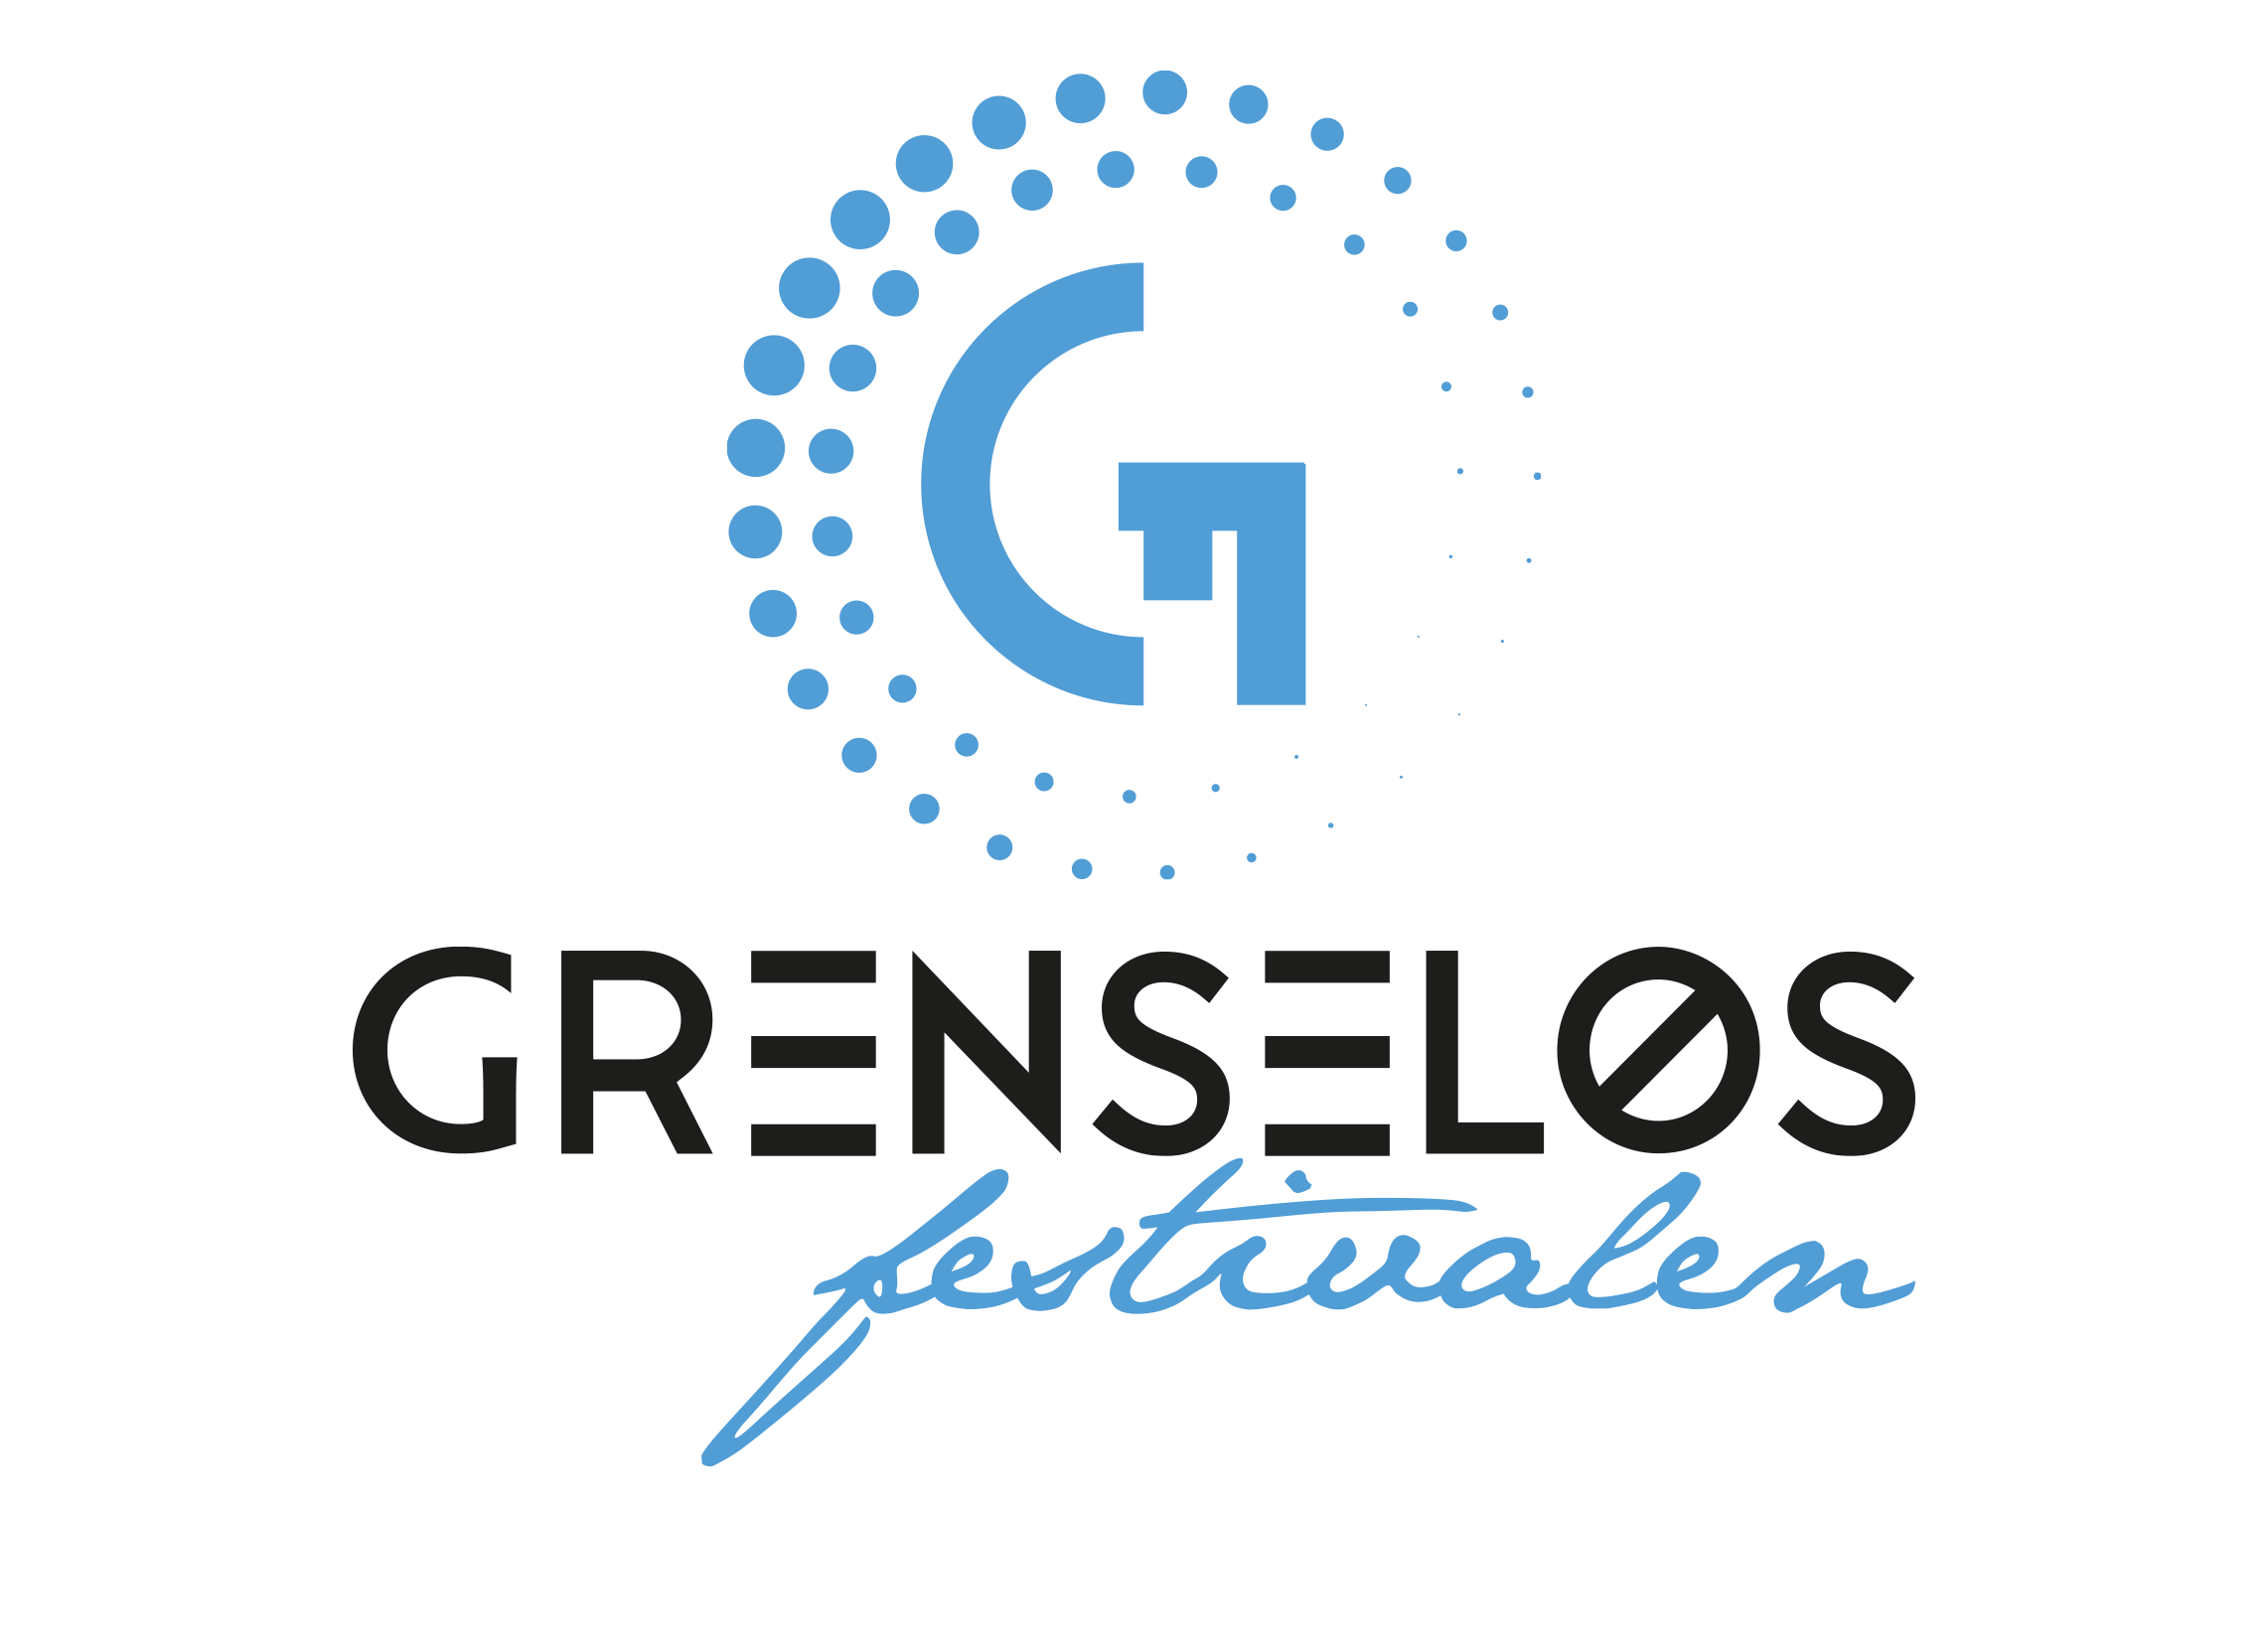 Grenselosfestivalen presale information on freepresalepasswords.com